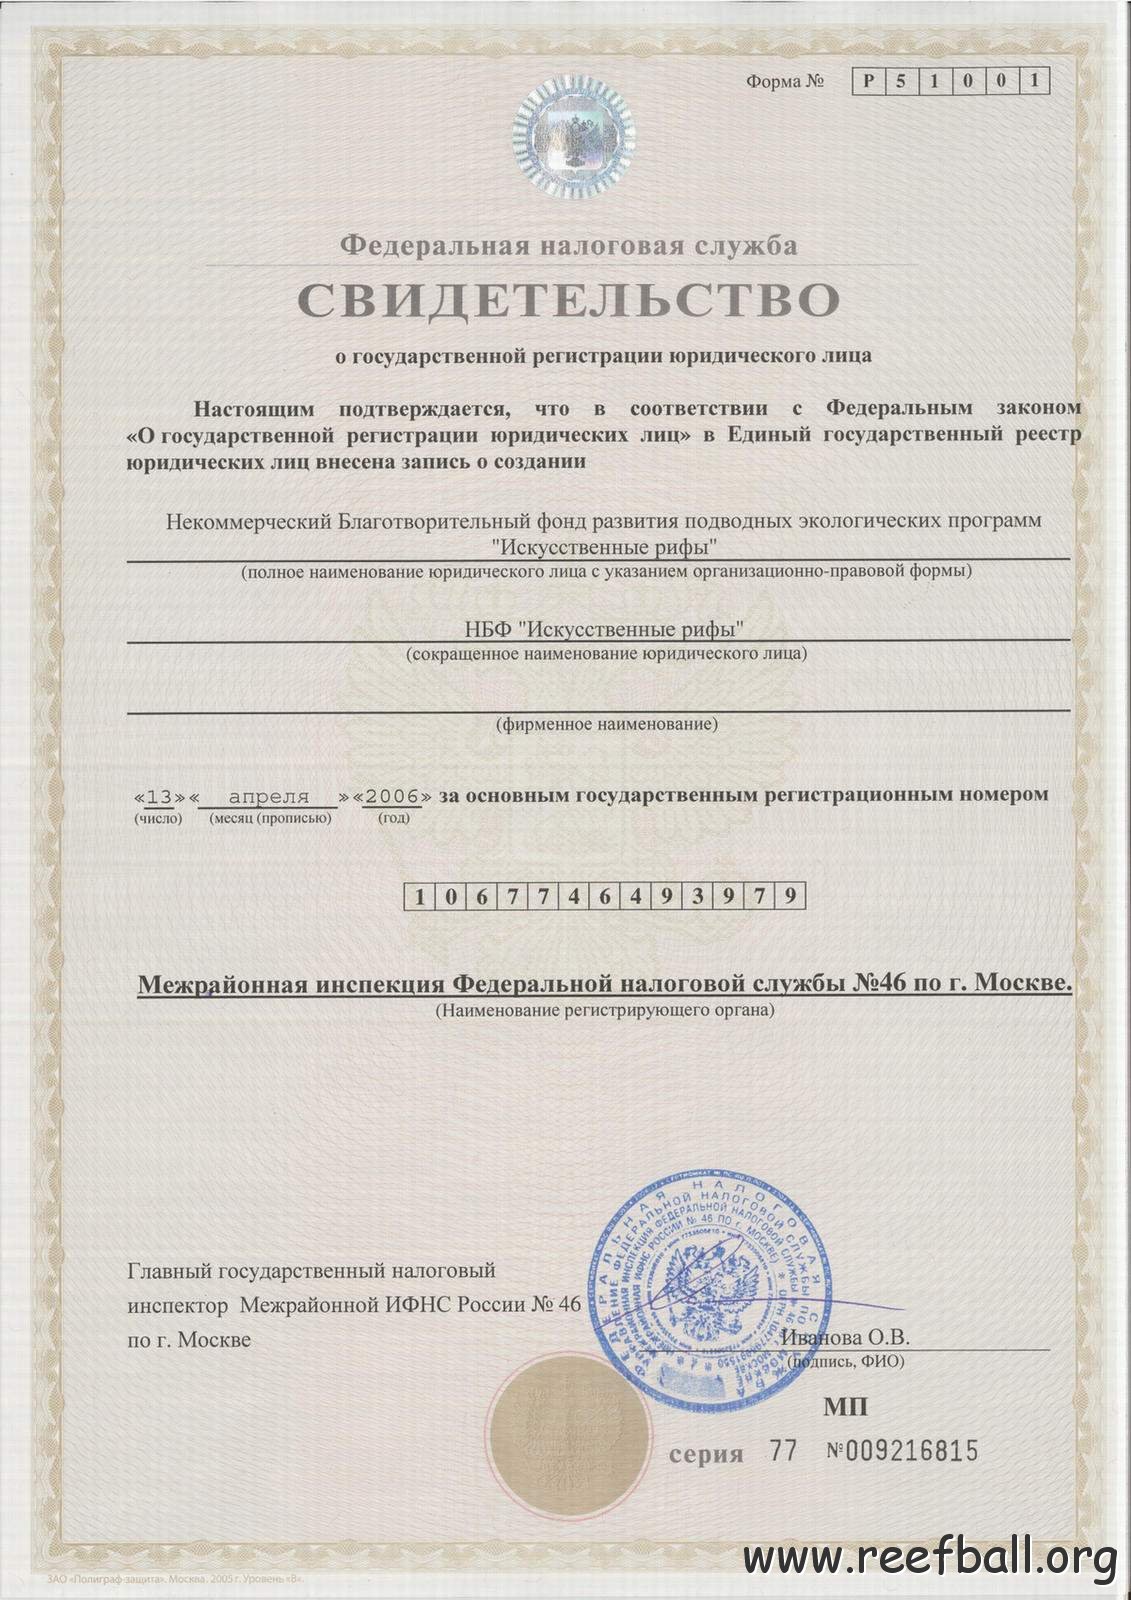 Russianregistration